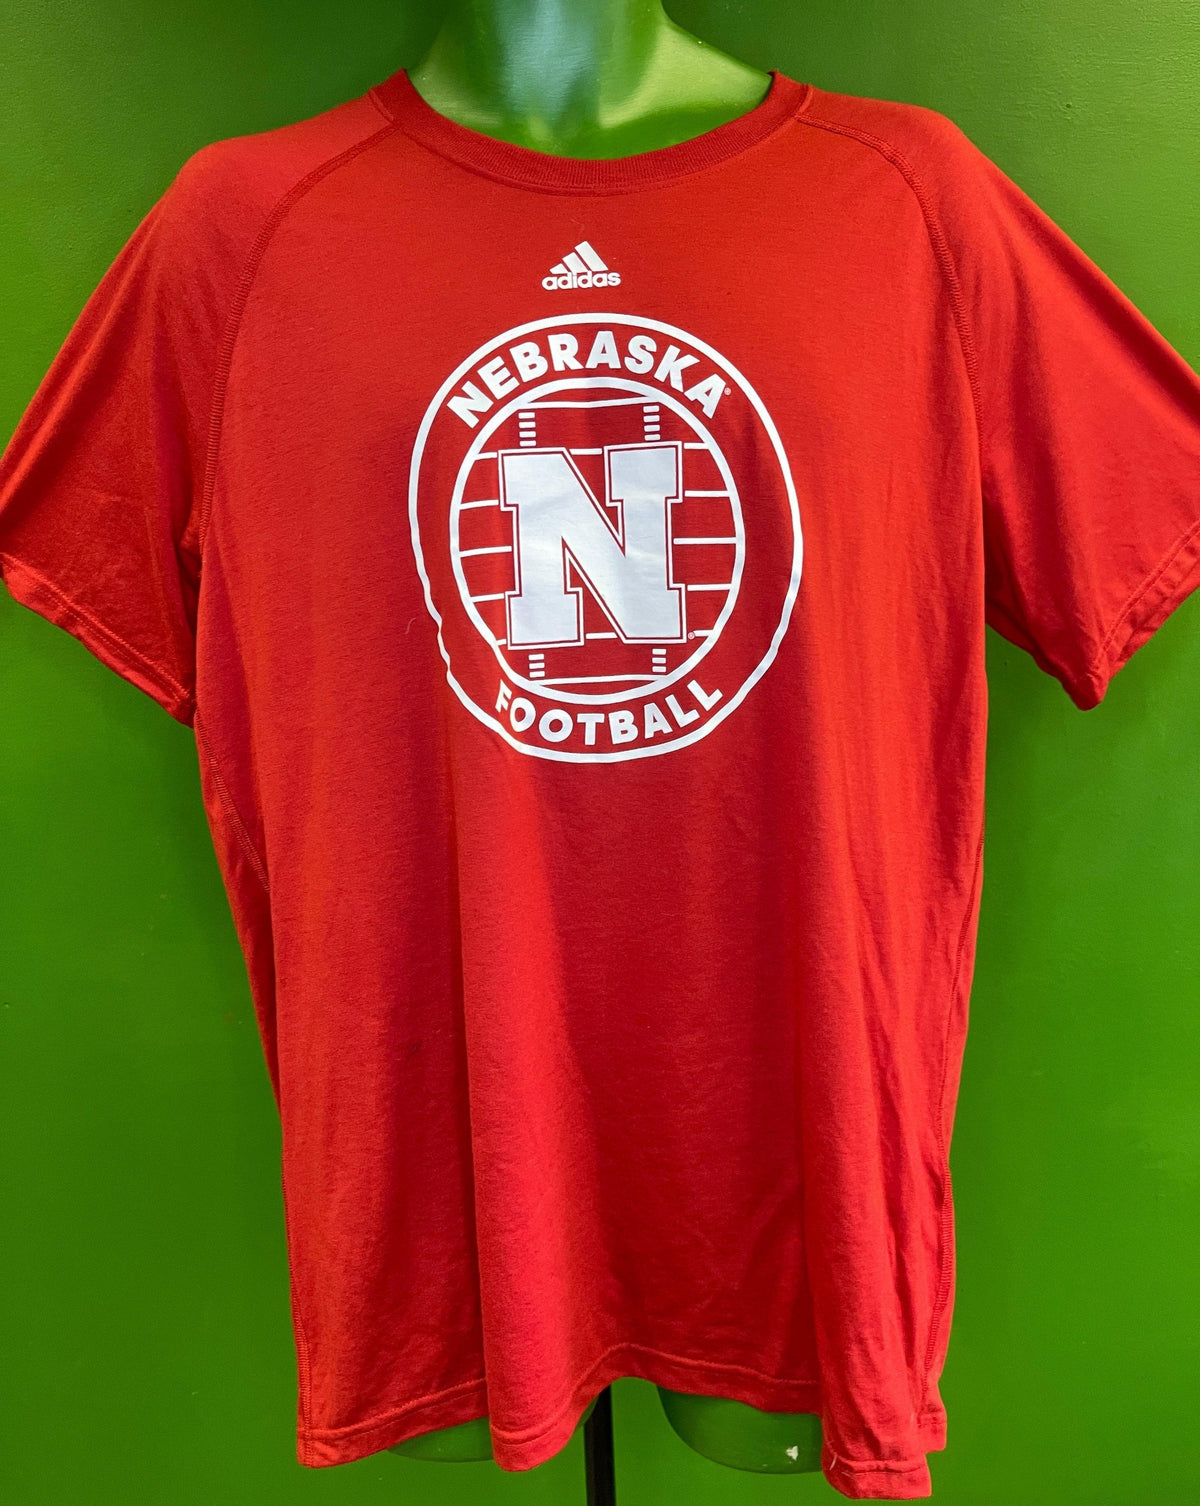 NCAA Nebraska Cornhuskers Adidas Red T-Shirt Men's X-Large NWT!